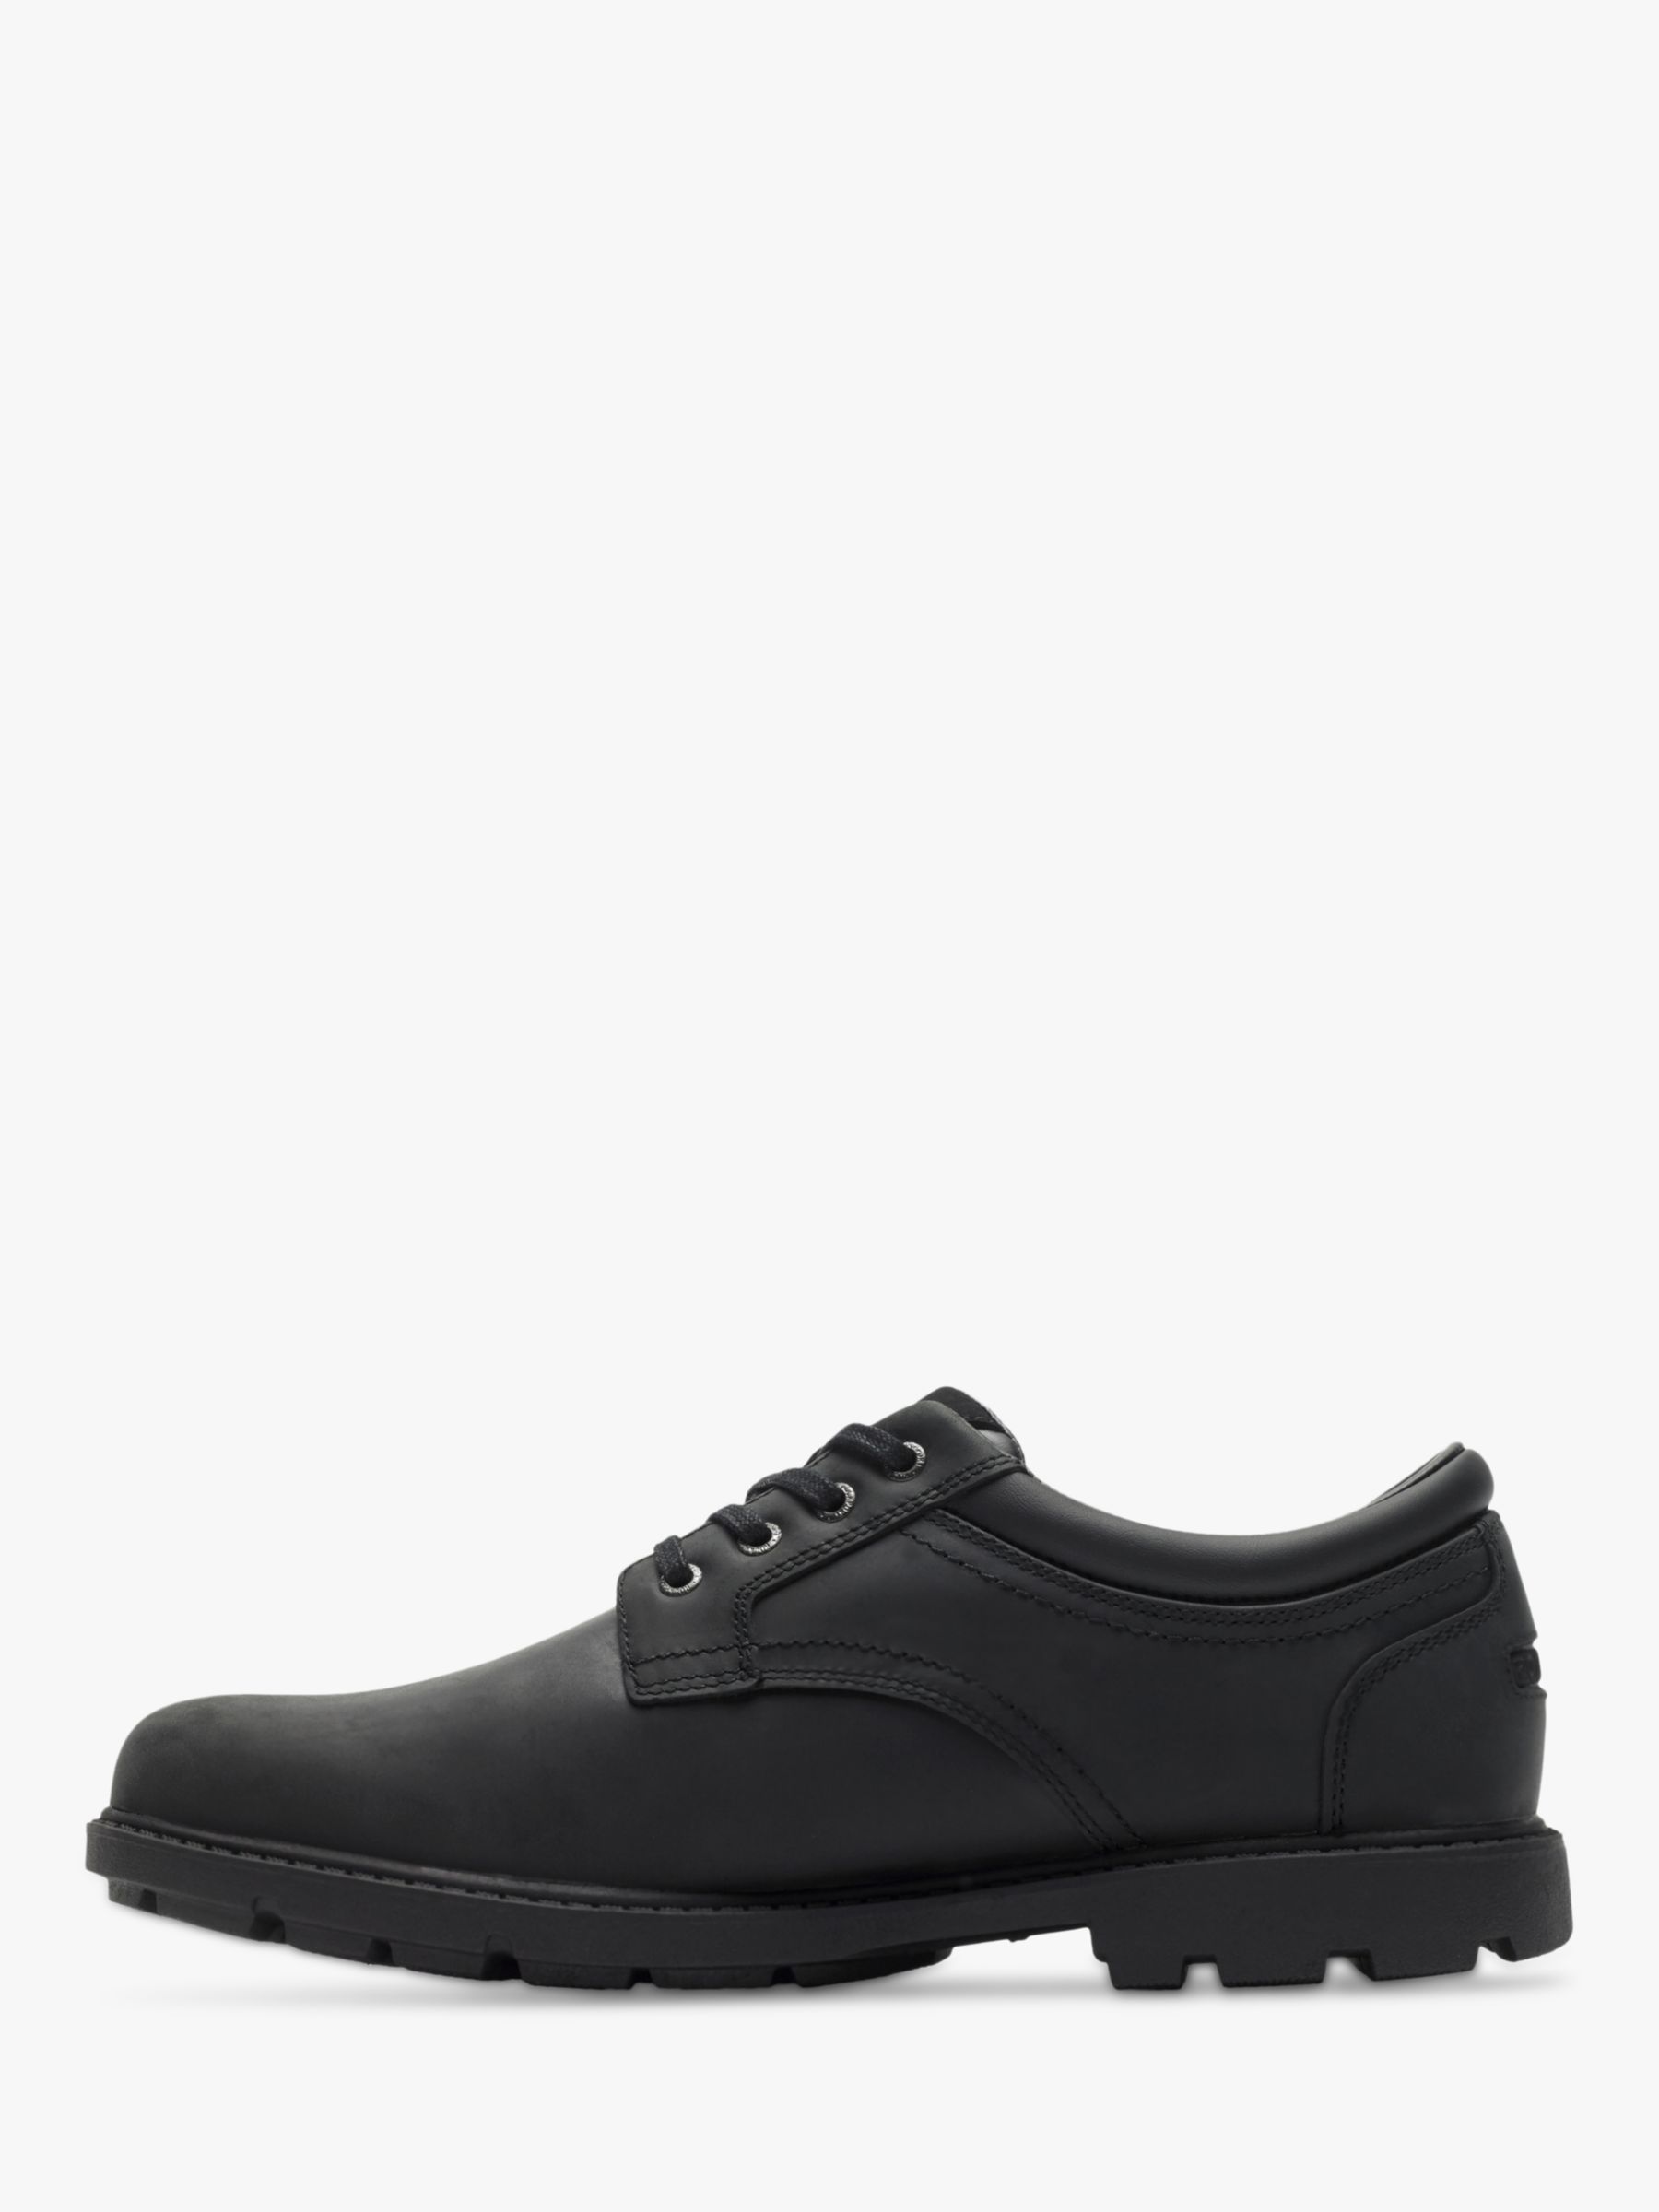 Rockport Storm Surge Leather Oxford Shoes, Black